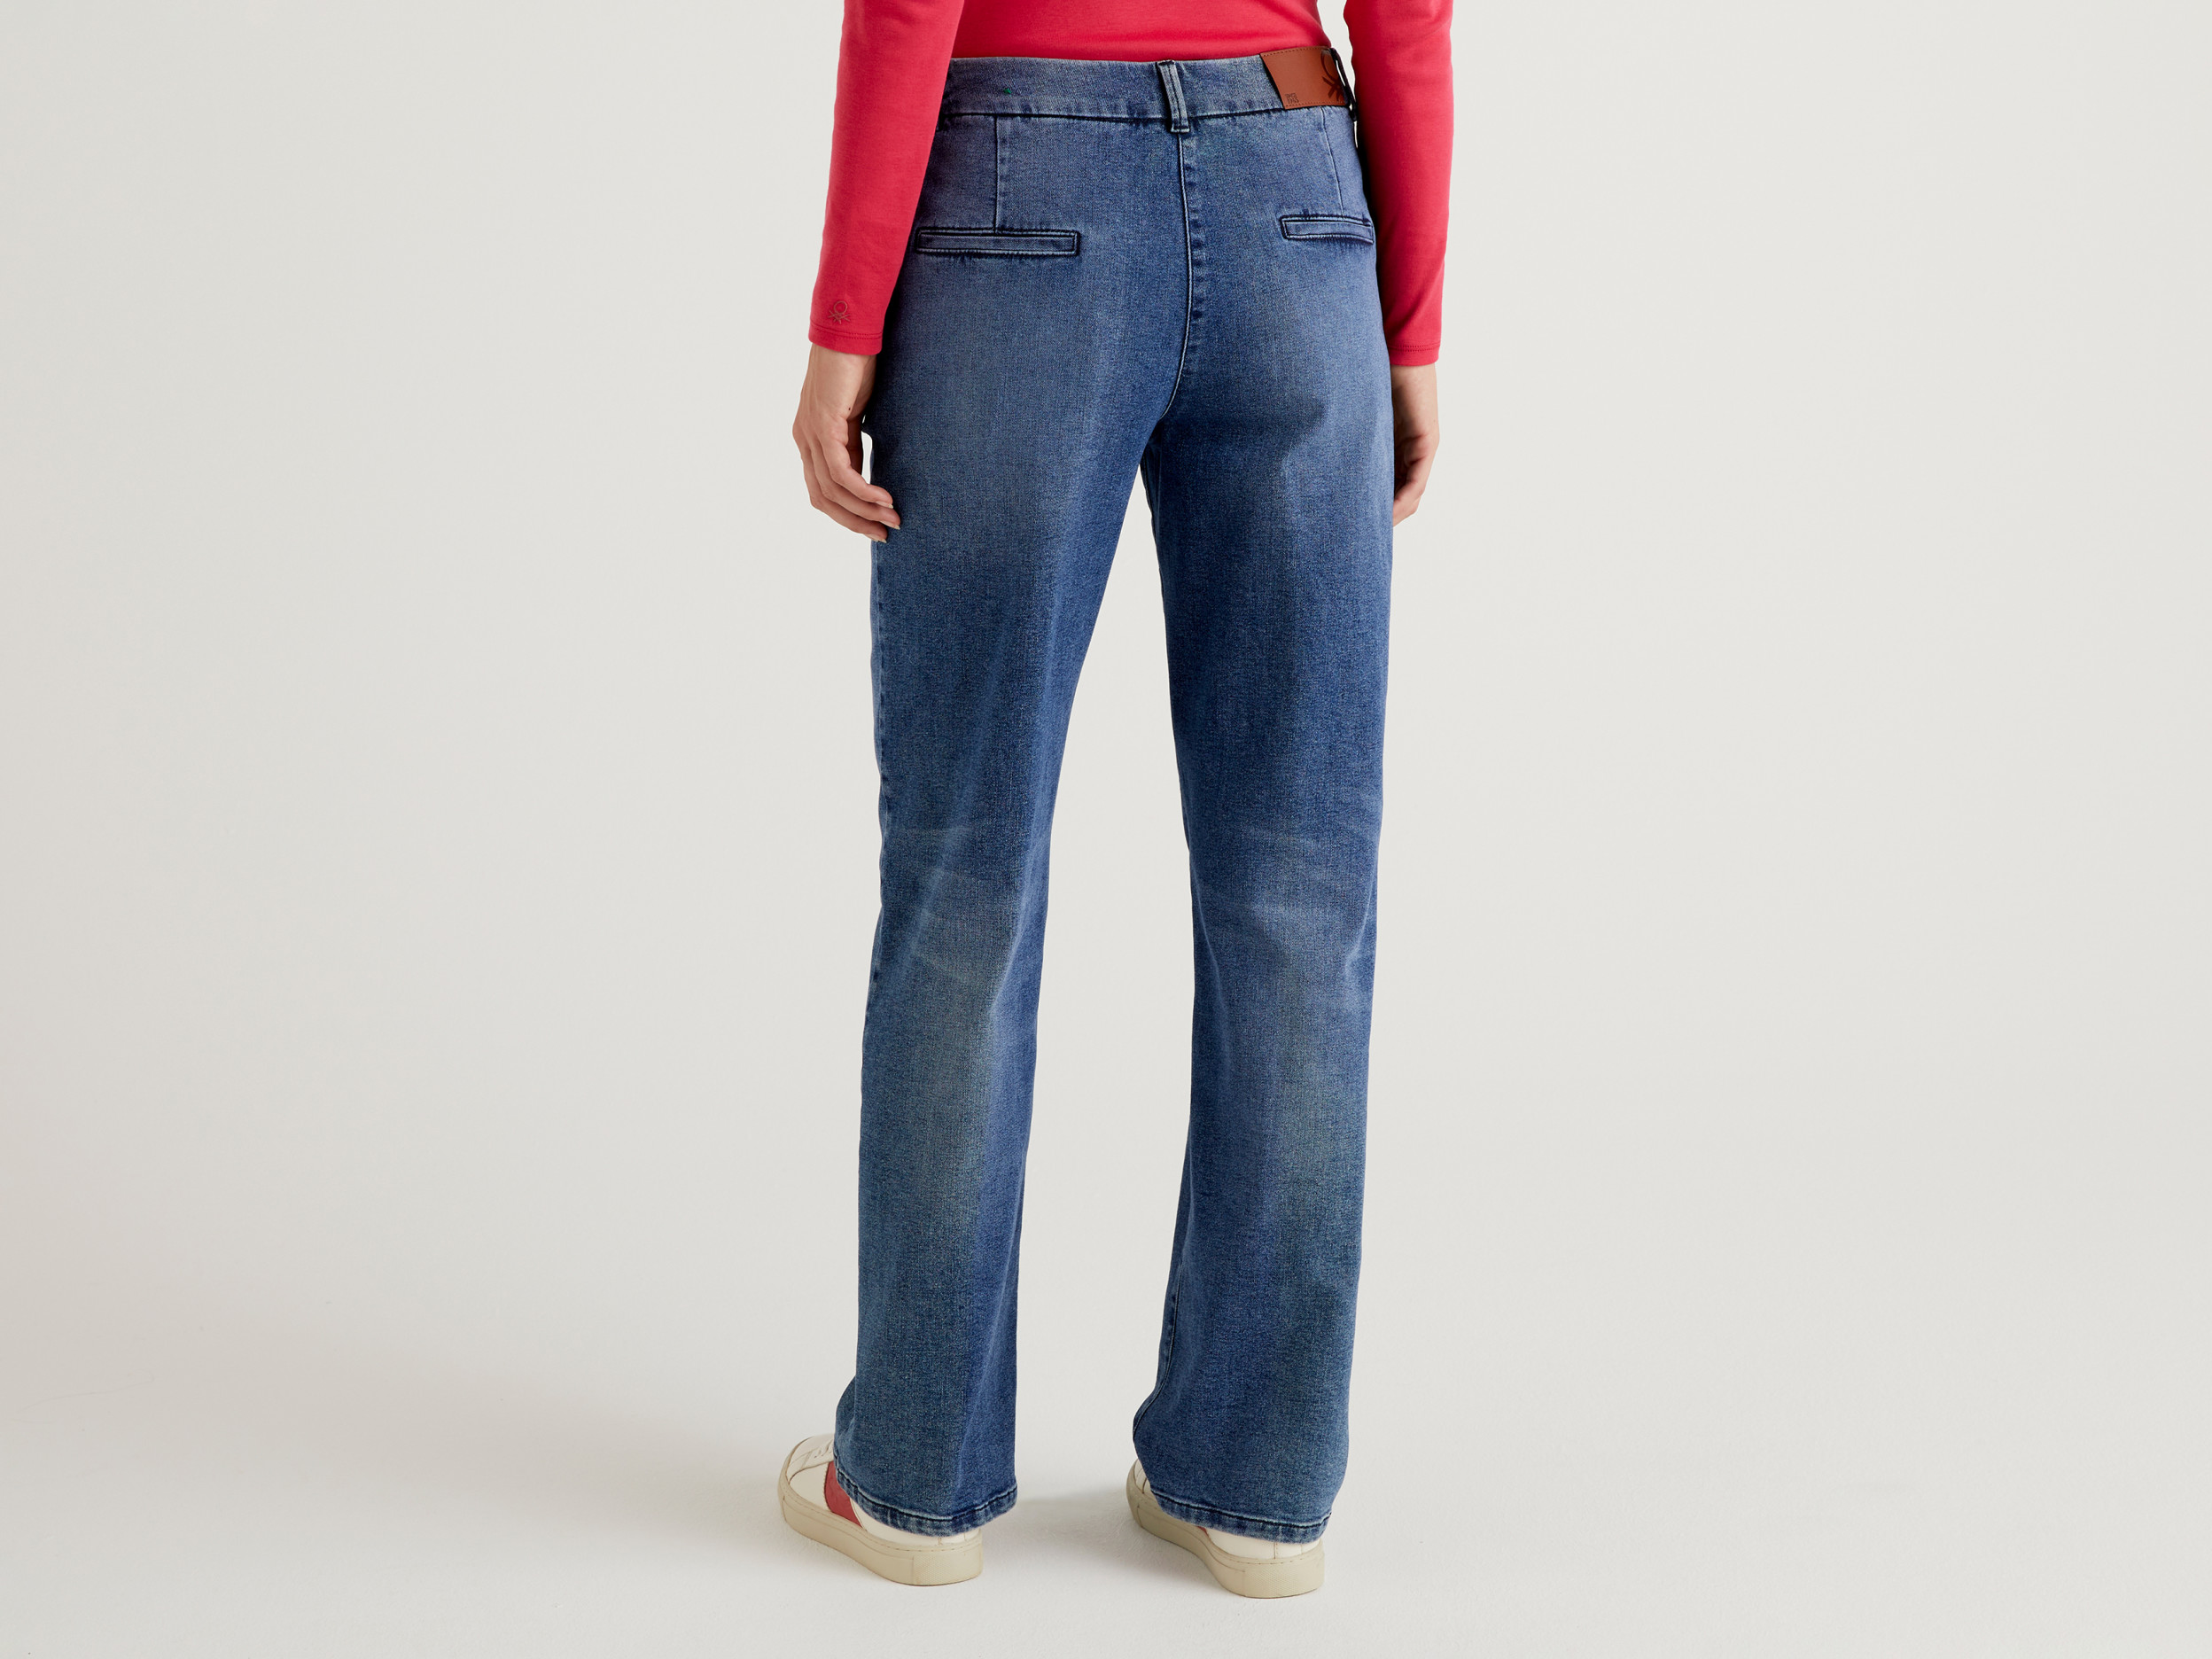 Benetton, Wide Fit Jeans With Straight Leg, Taglia 6, Blue, Women